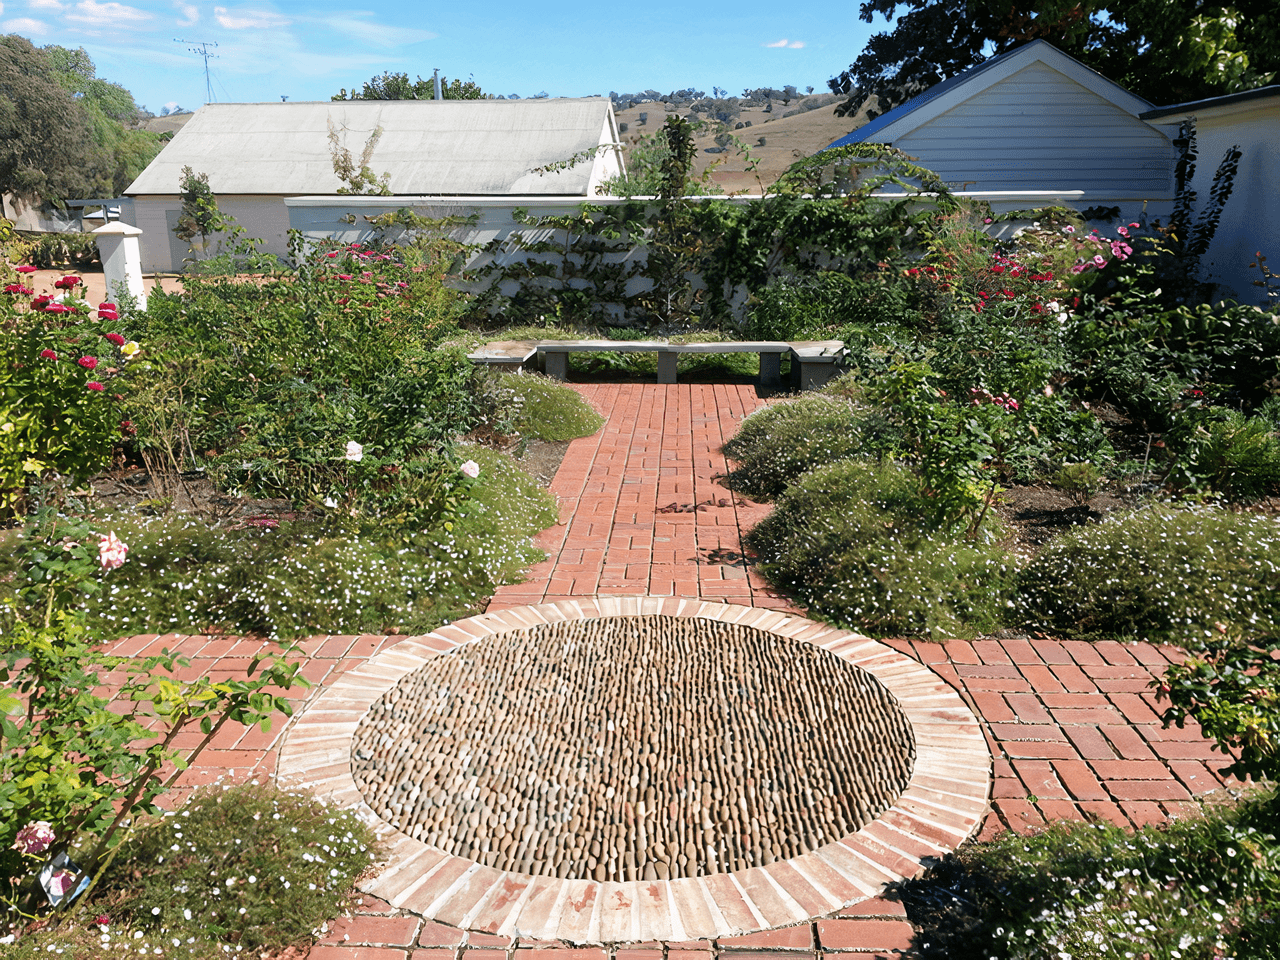 Decorative brick paving and rose garden